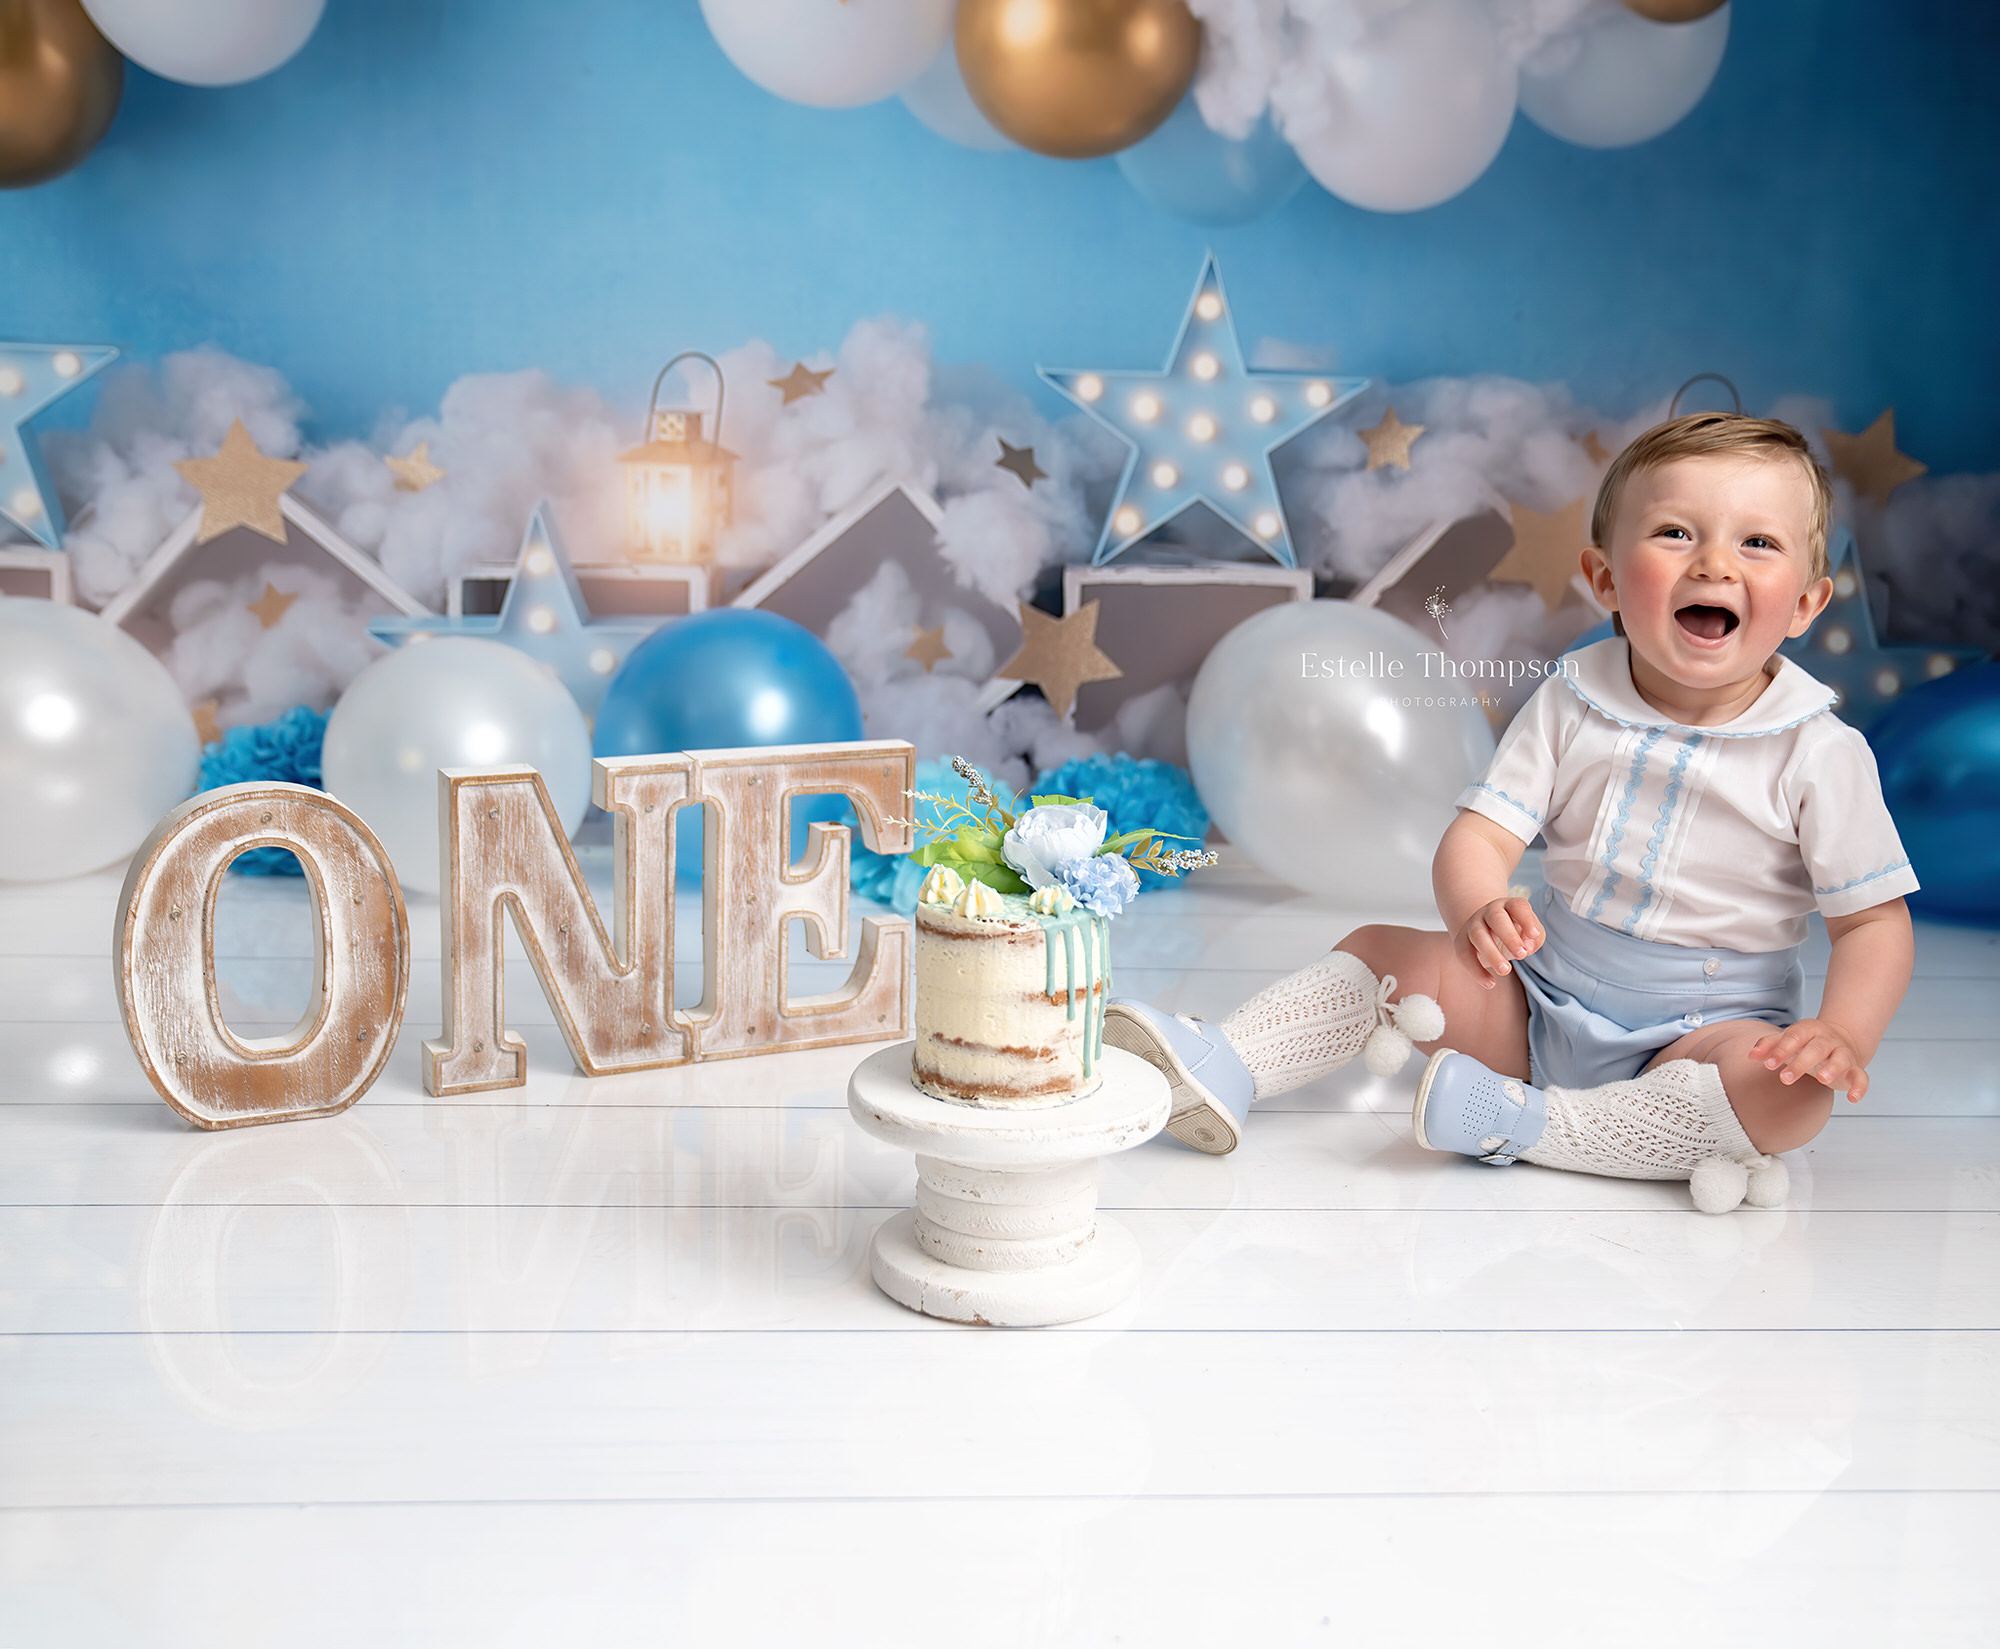 Baby boy at a cake smash photoshoot